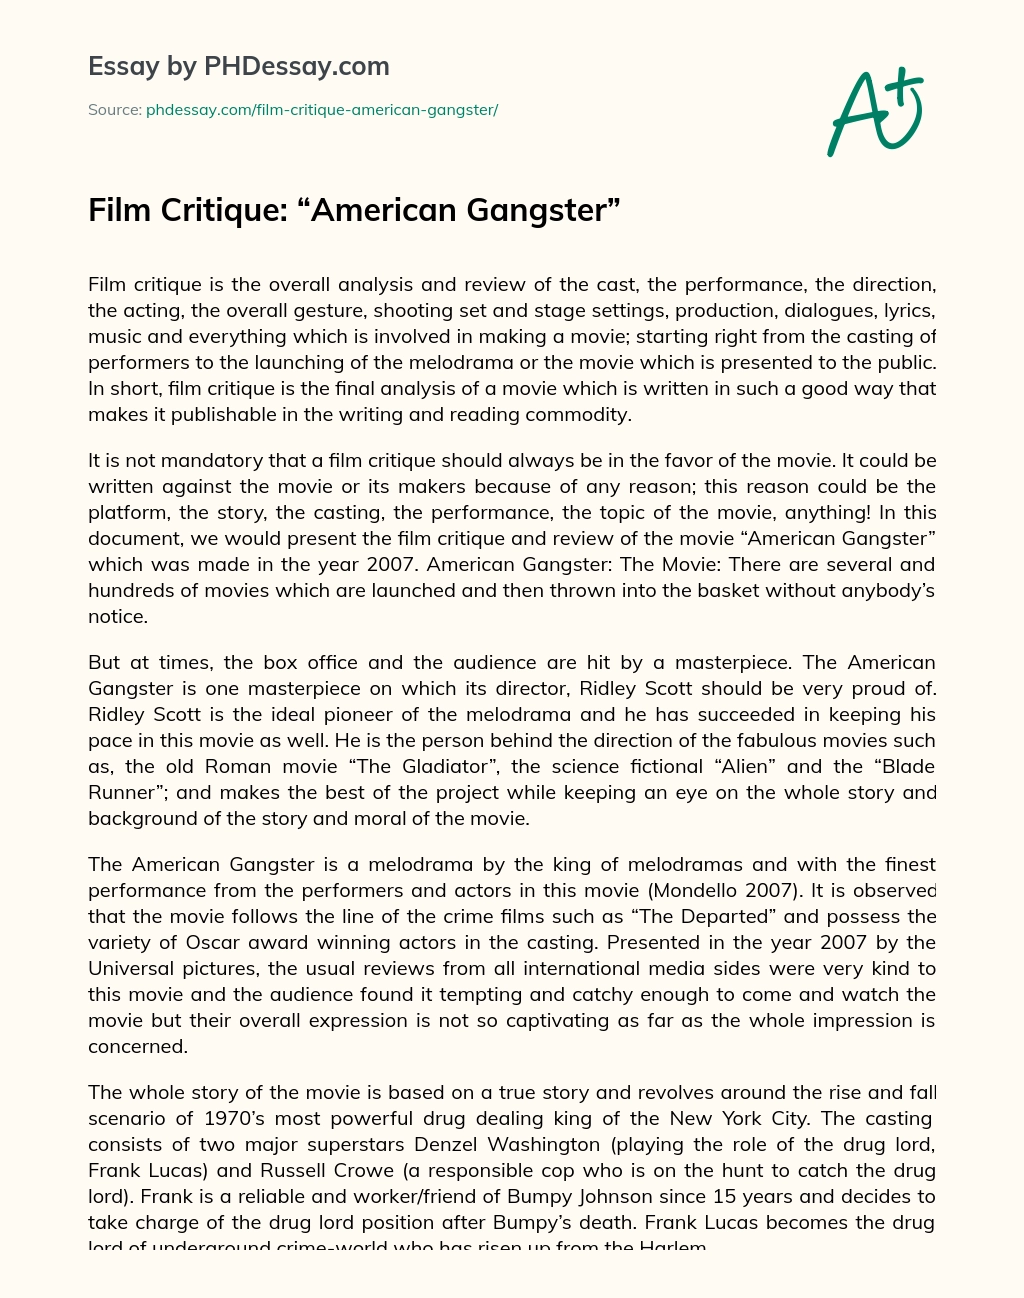 Film Critique: “American Gangster” essay